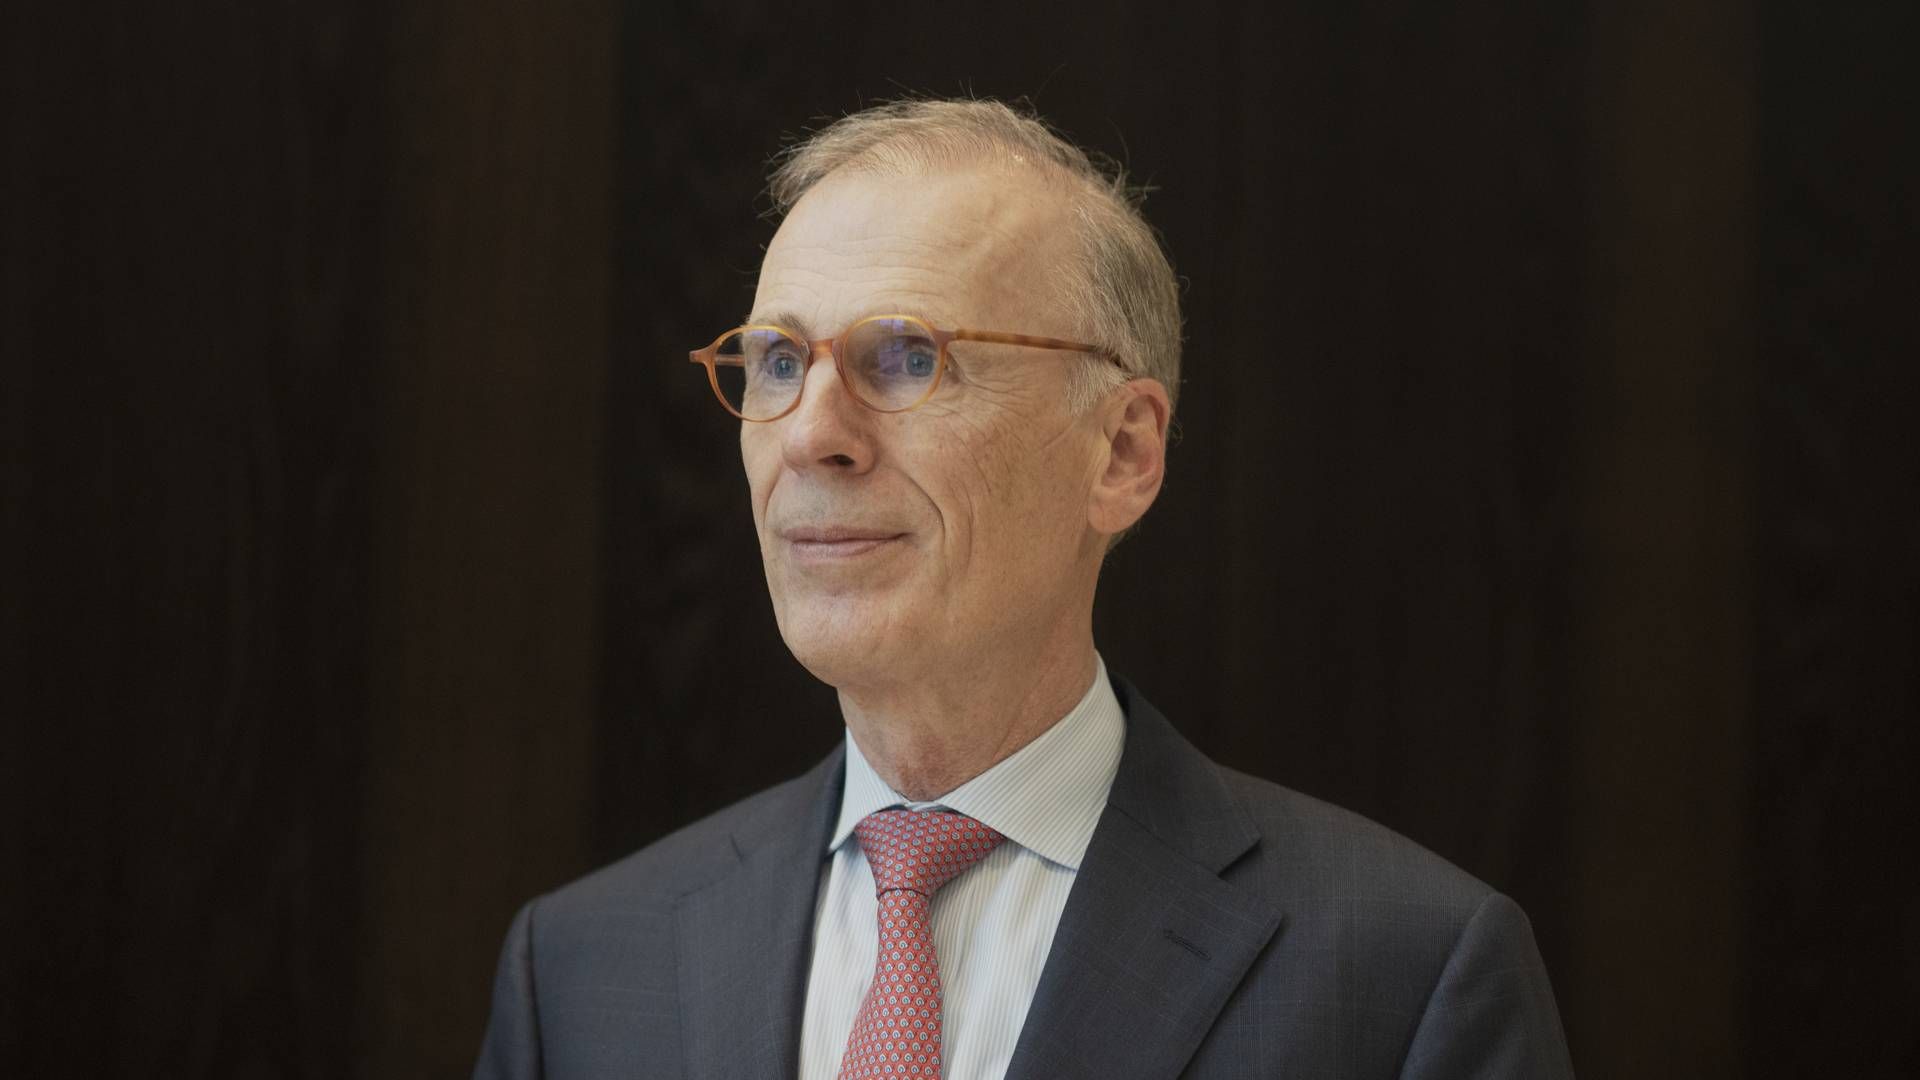 Adm. direktør i Carlsberg Cees 't Hart. | Foto: Liv Møller Kastrup/ERH